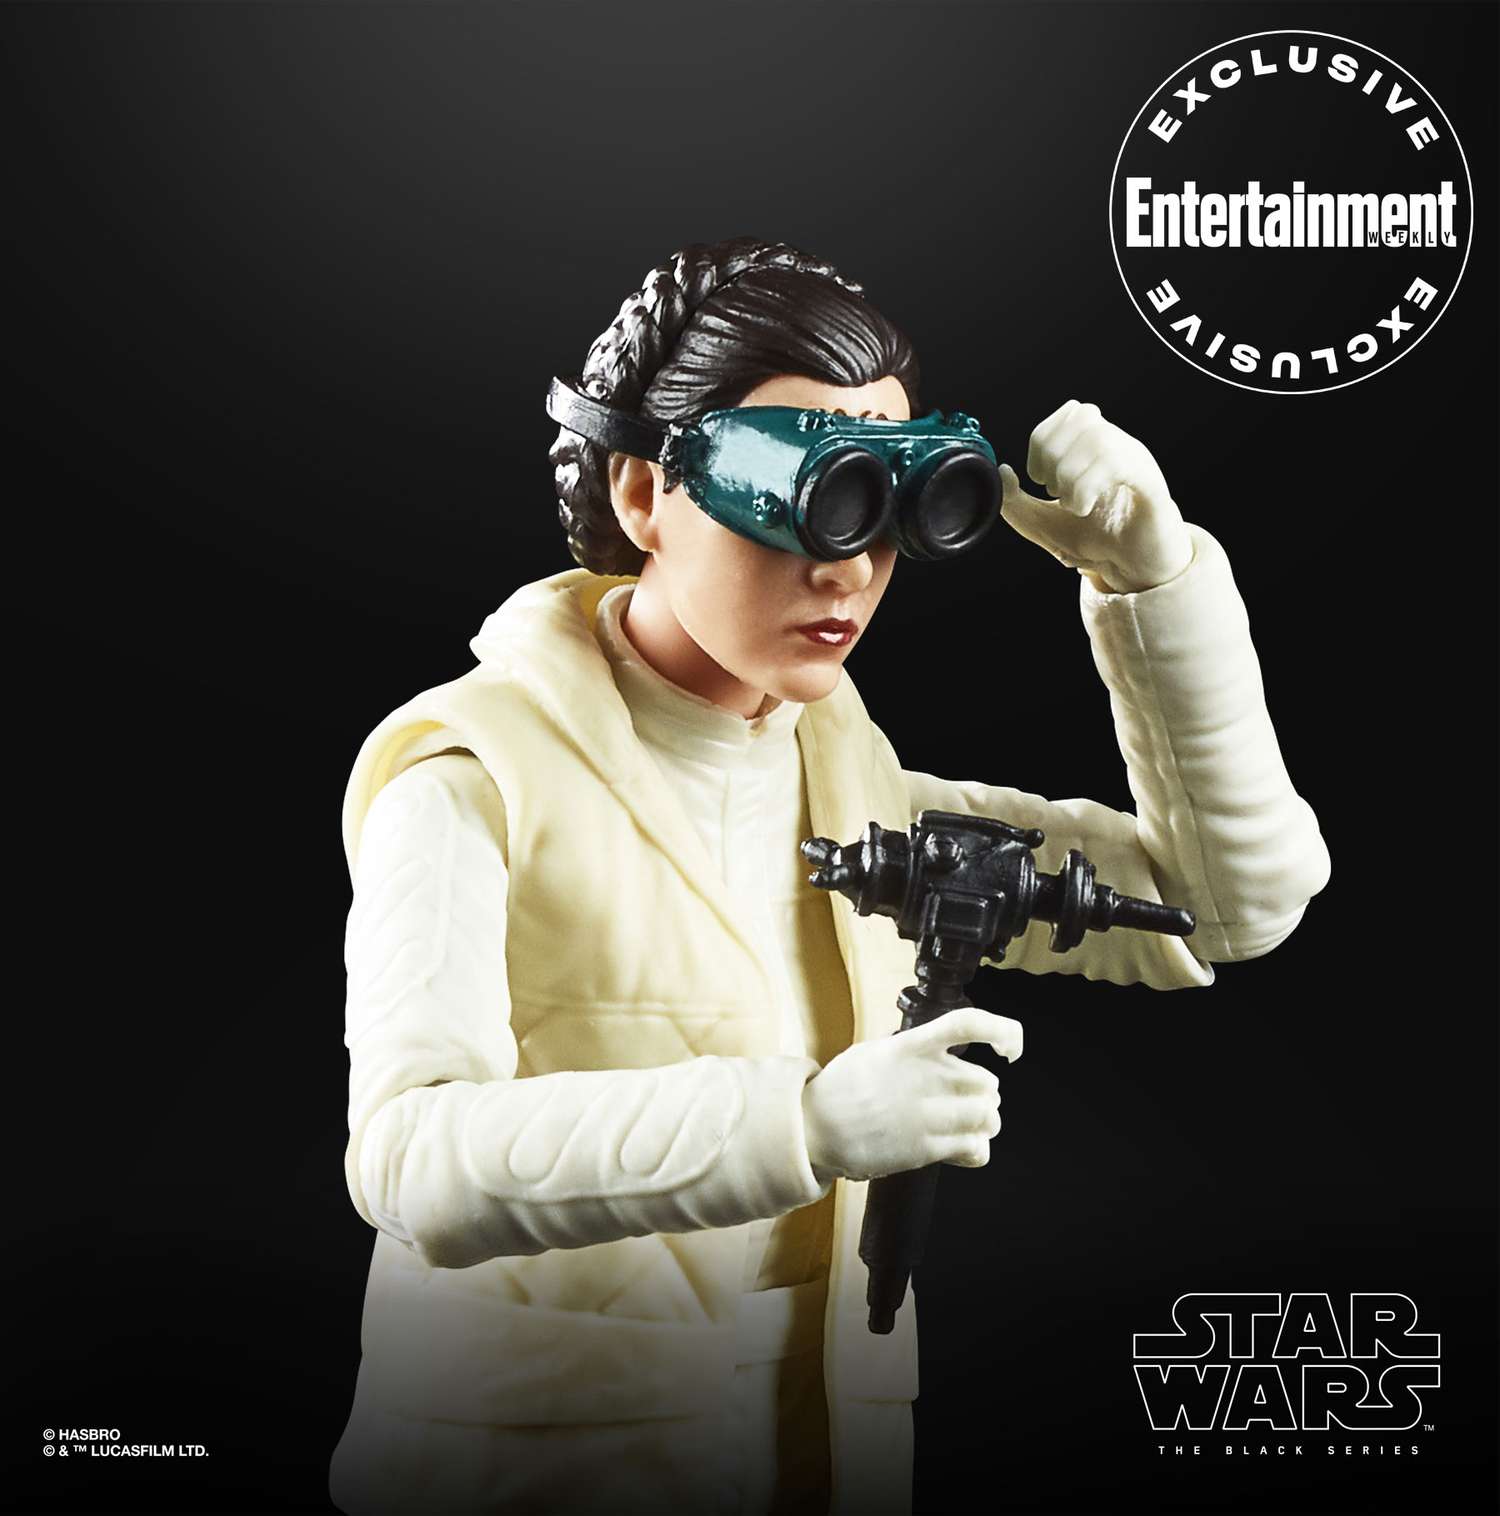 Star Wars: The Empire Strikes Back Hasbro toys